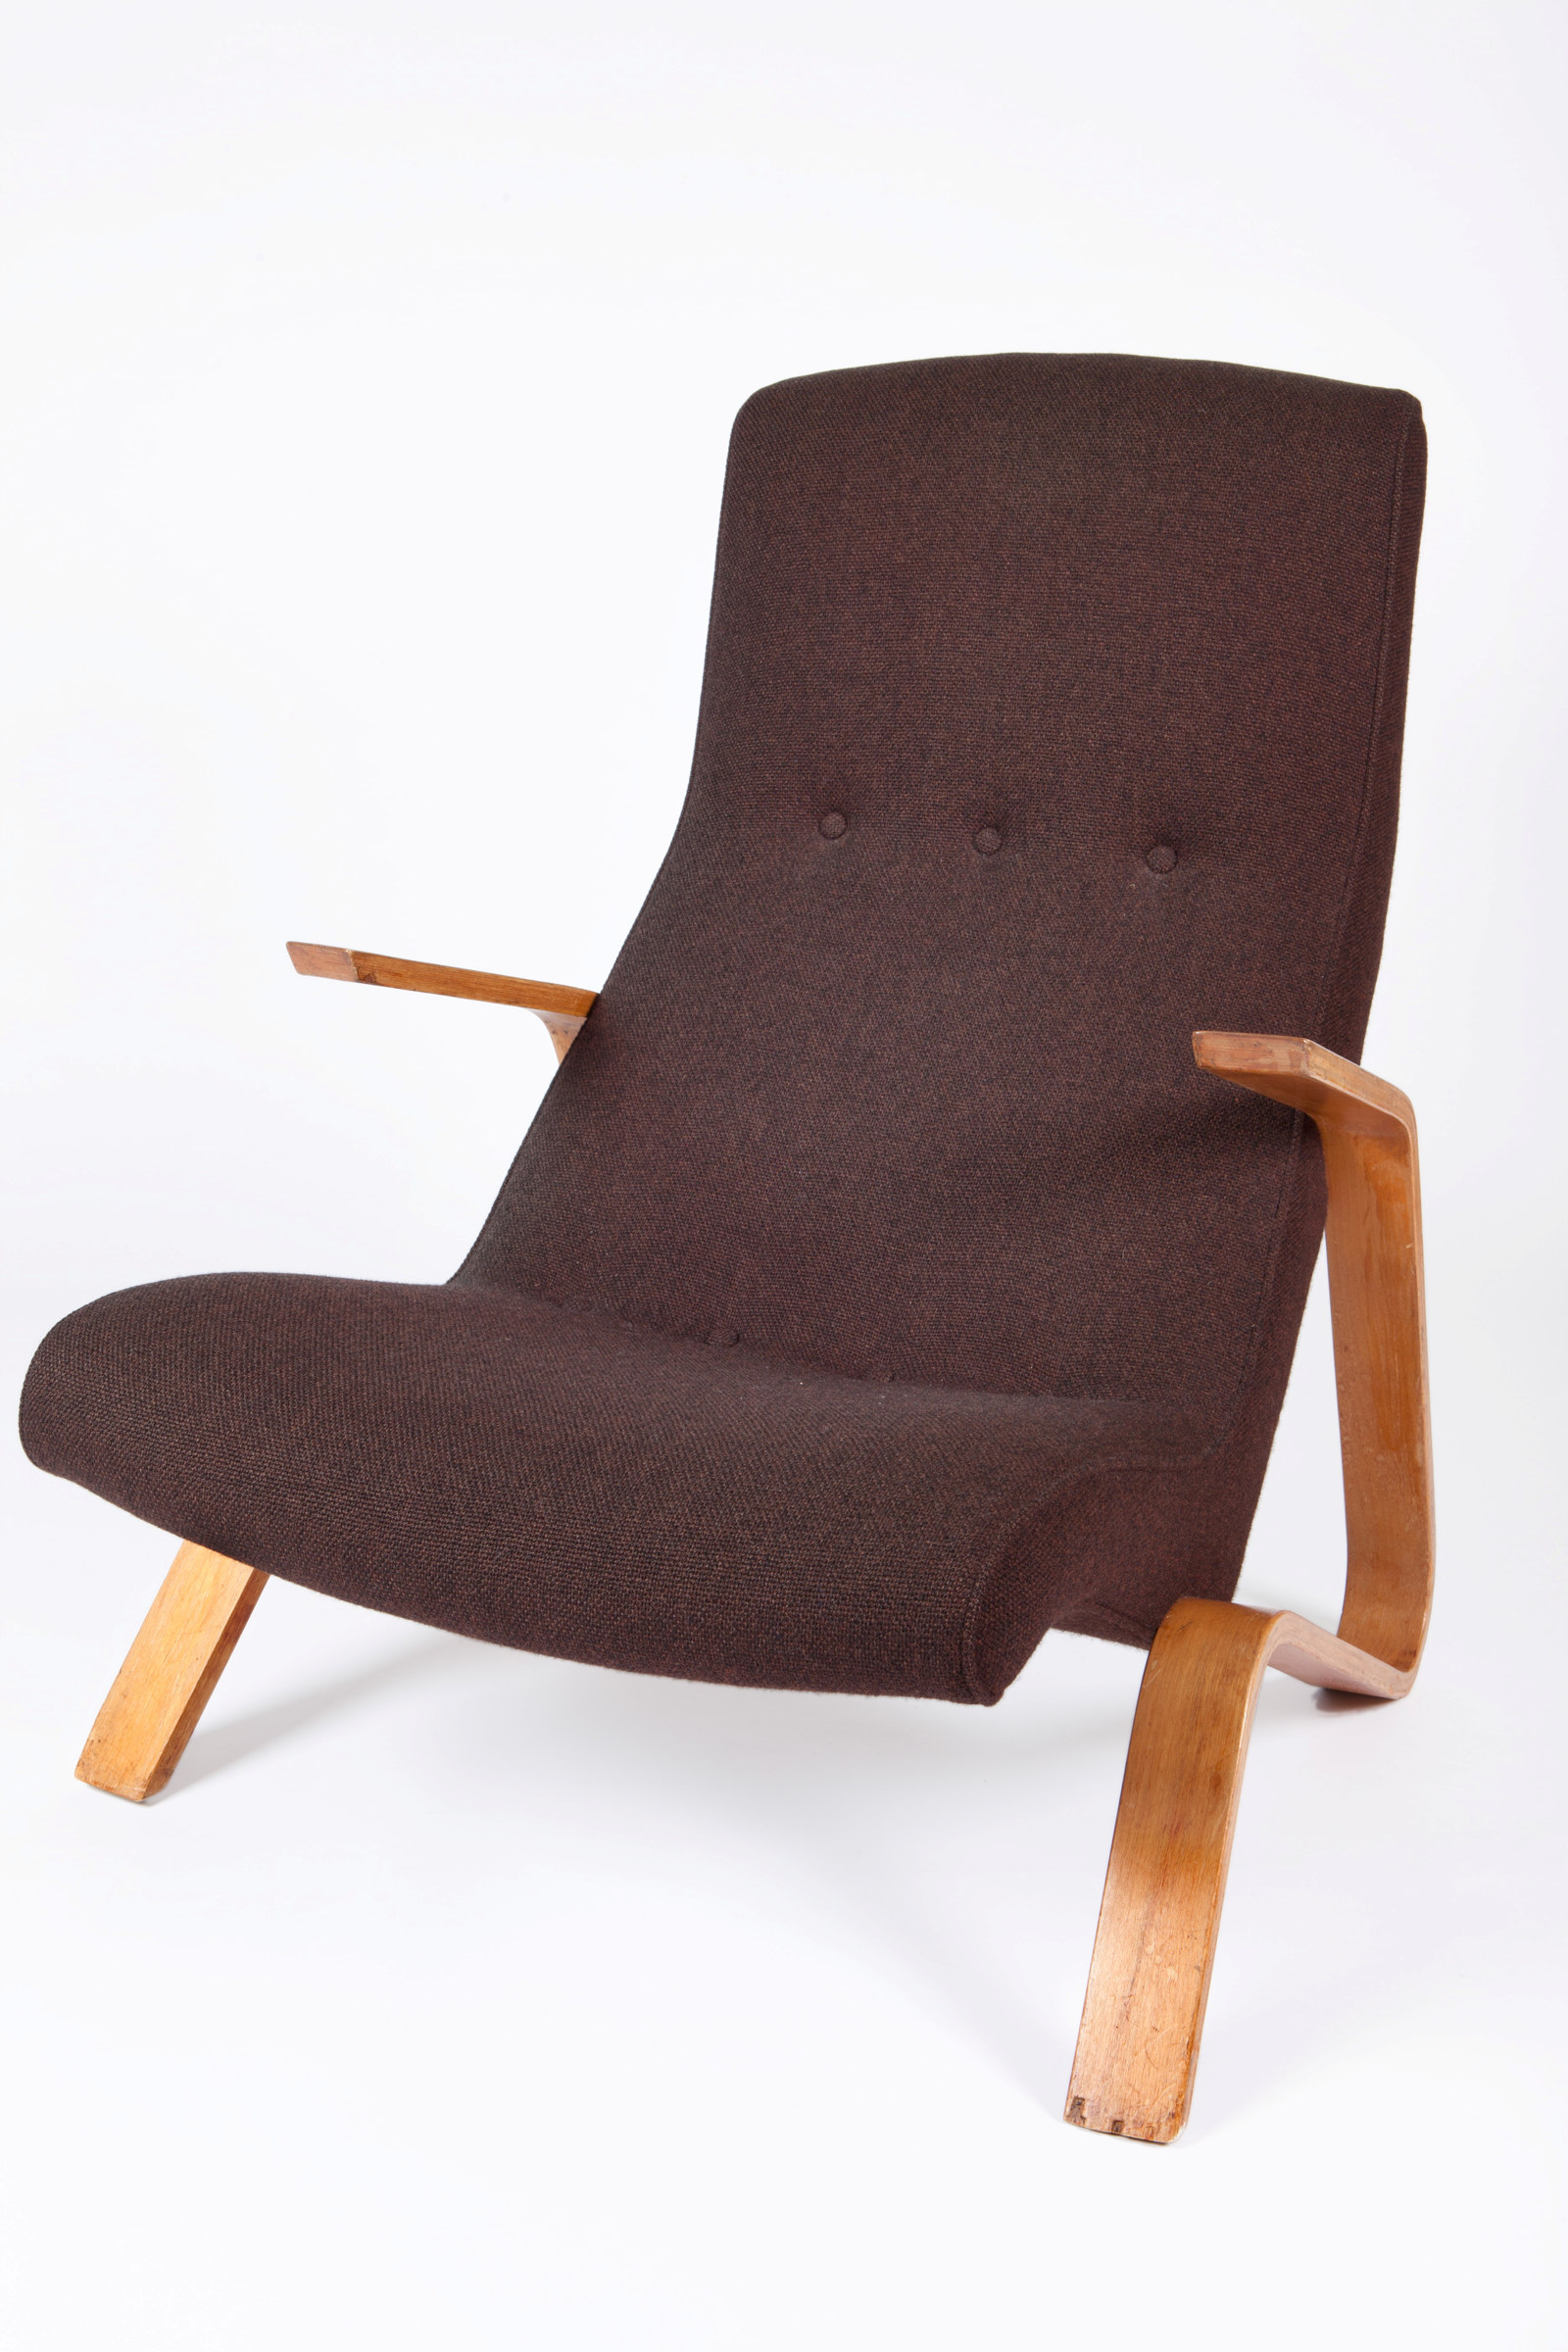 Lounge chair, Grasshopper design by Eero Saarinen, c1948